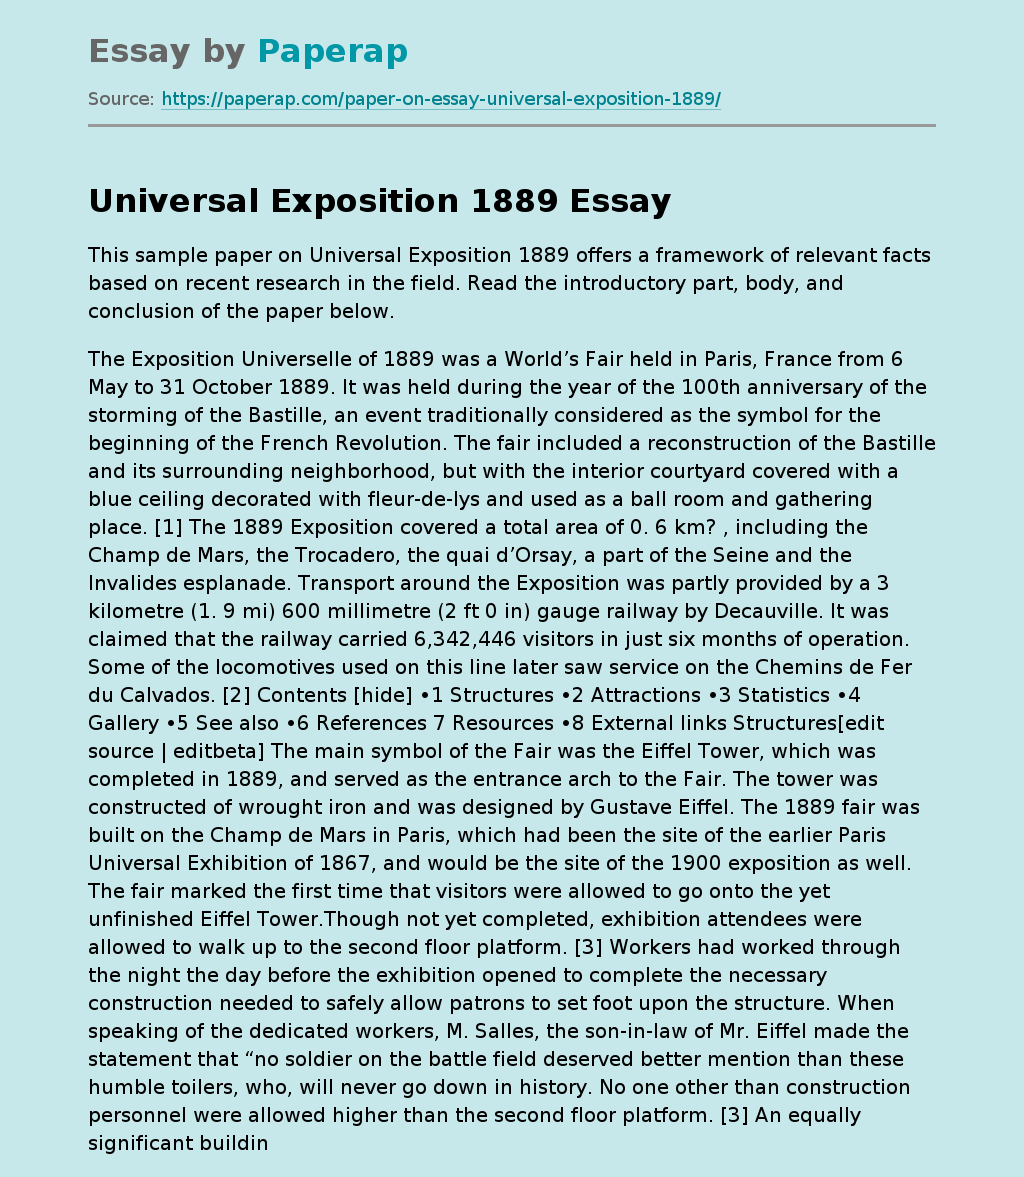 Universal Exposition 1889